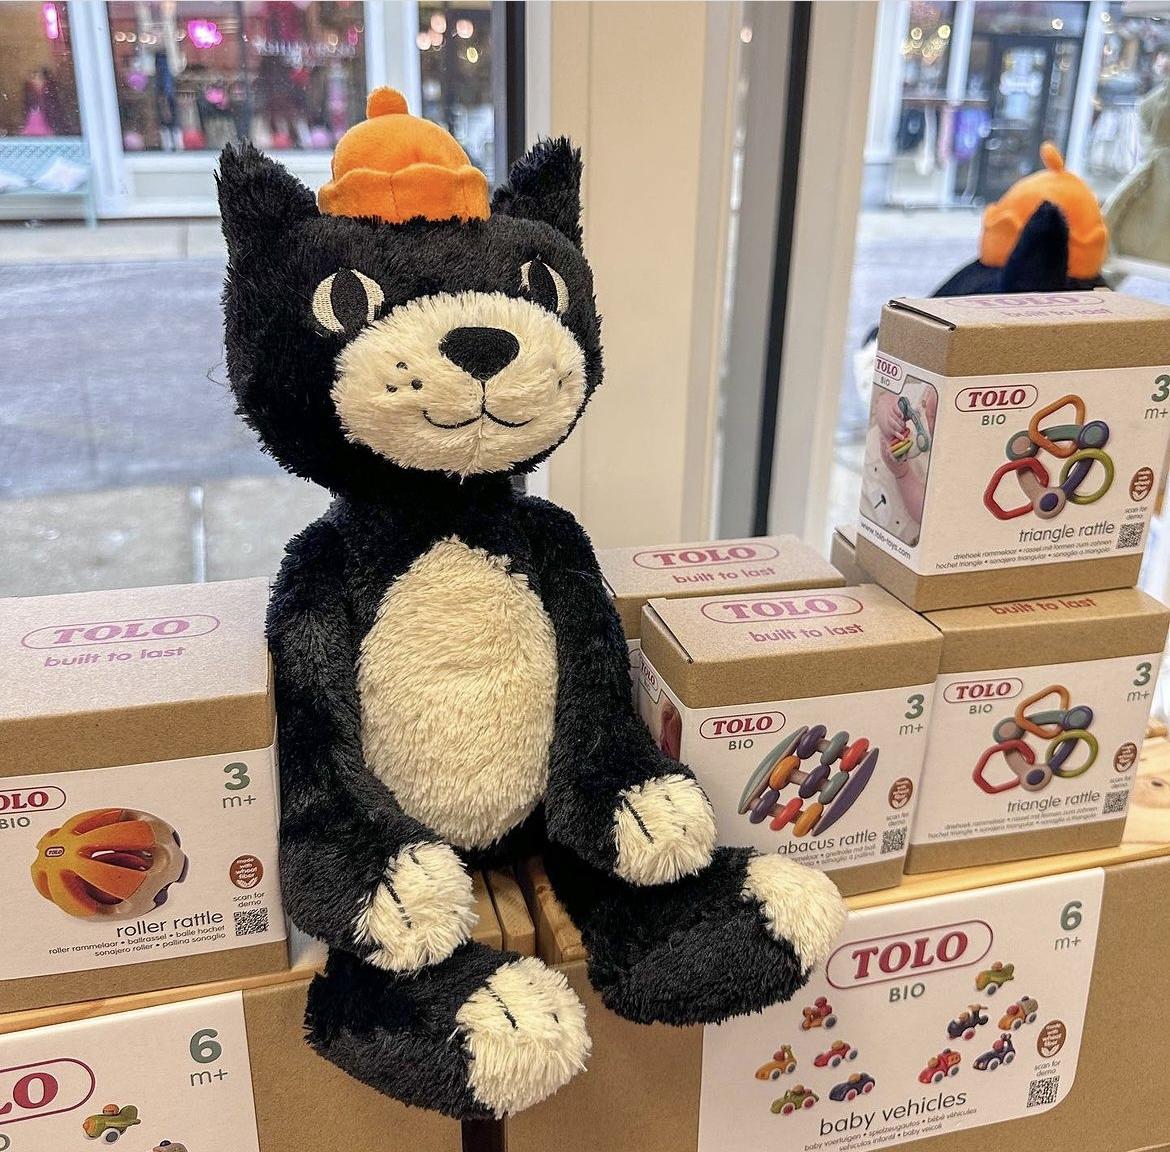 Jellycat stuffed animal on a store shelf